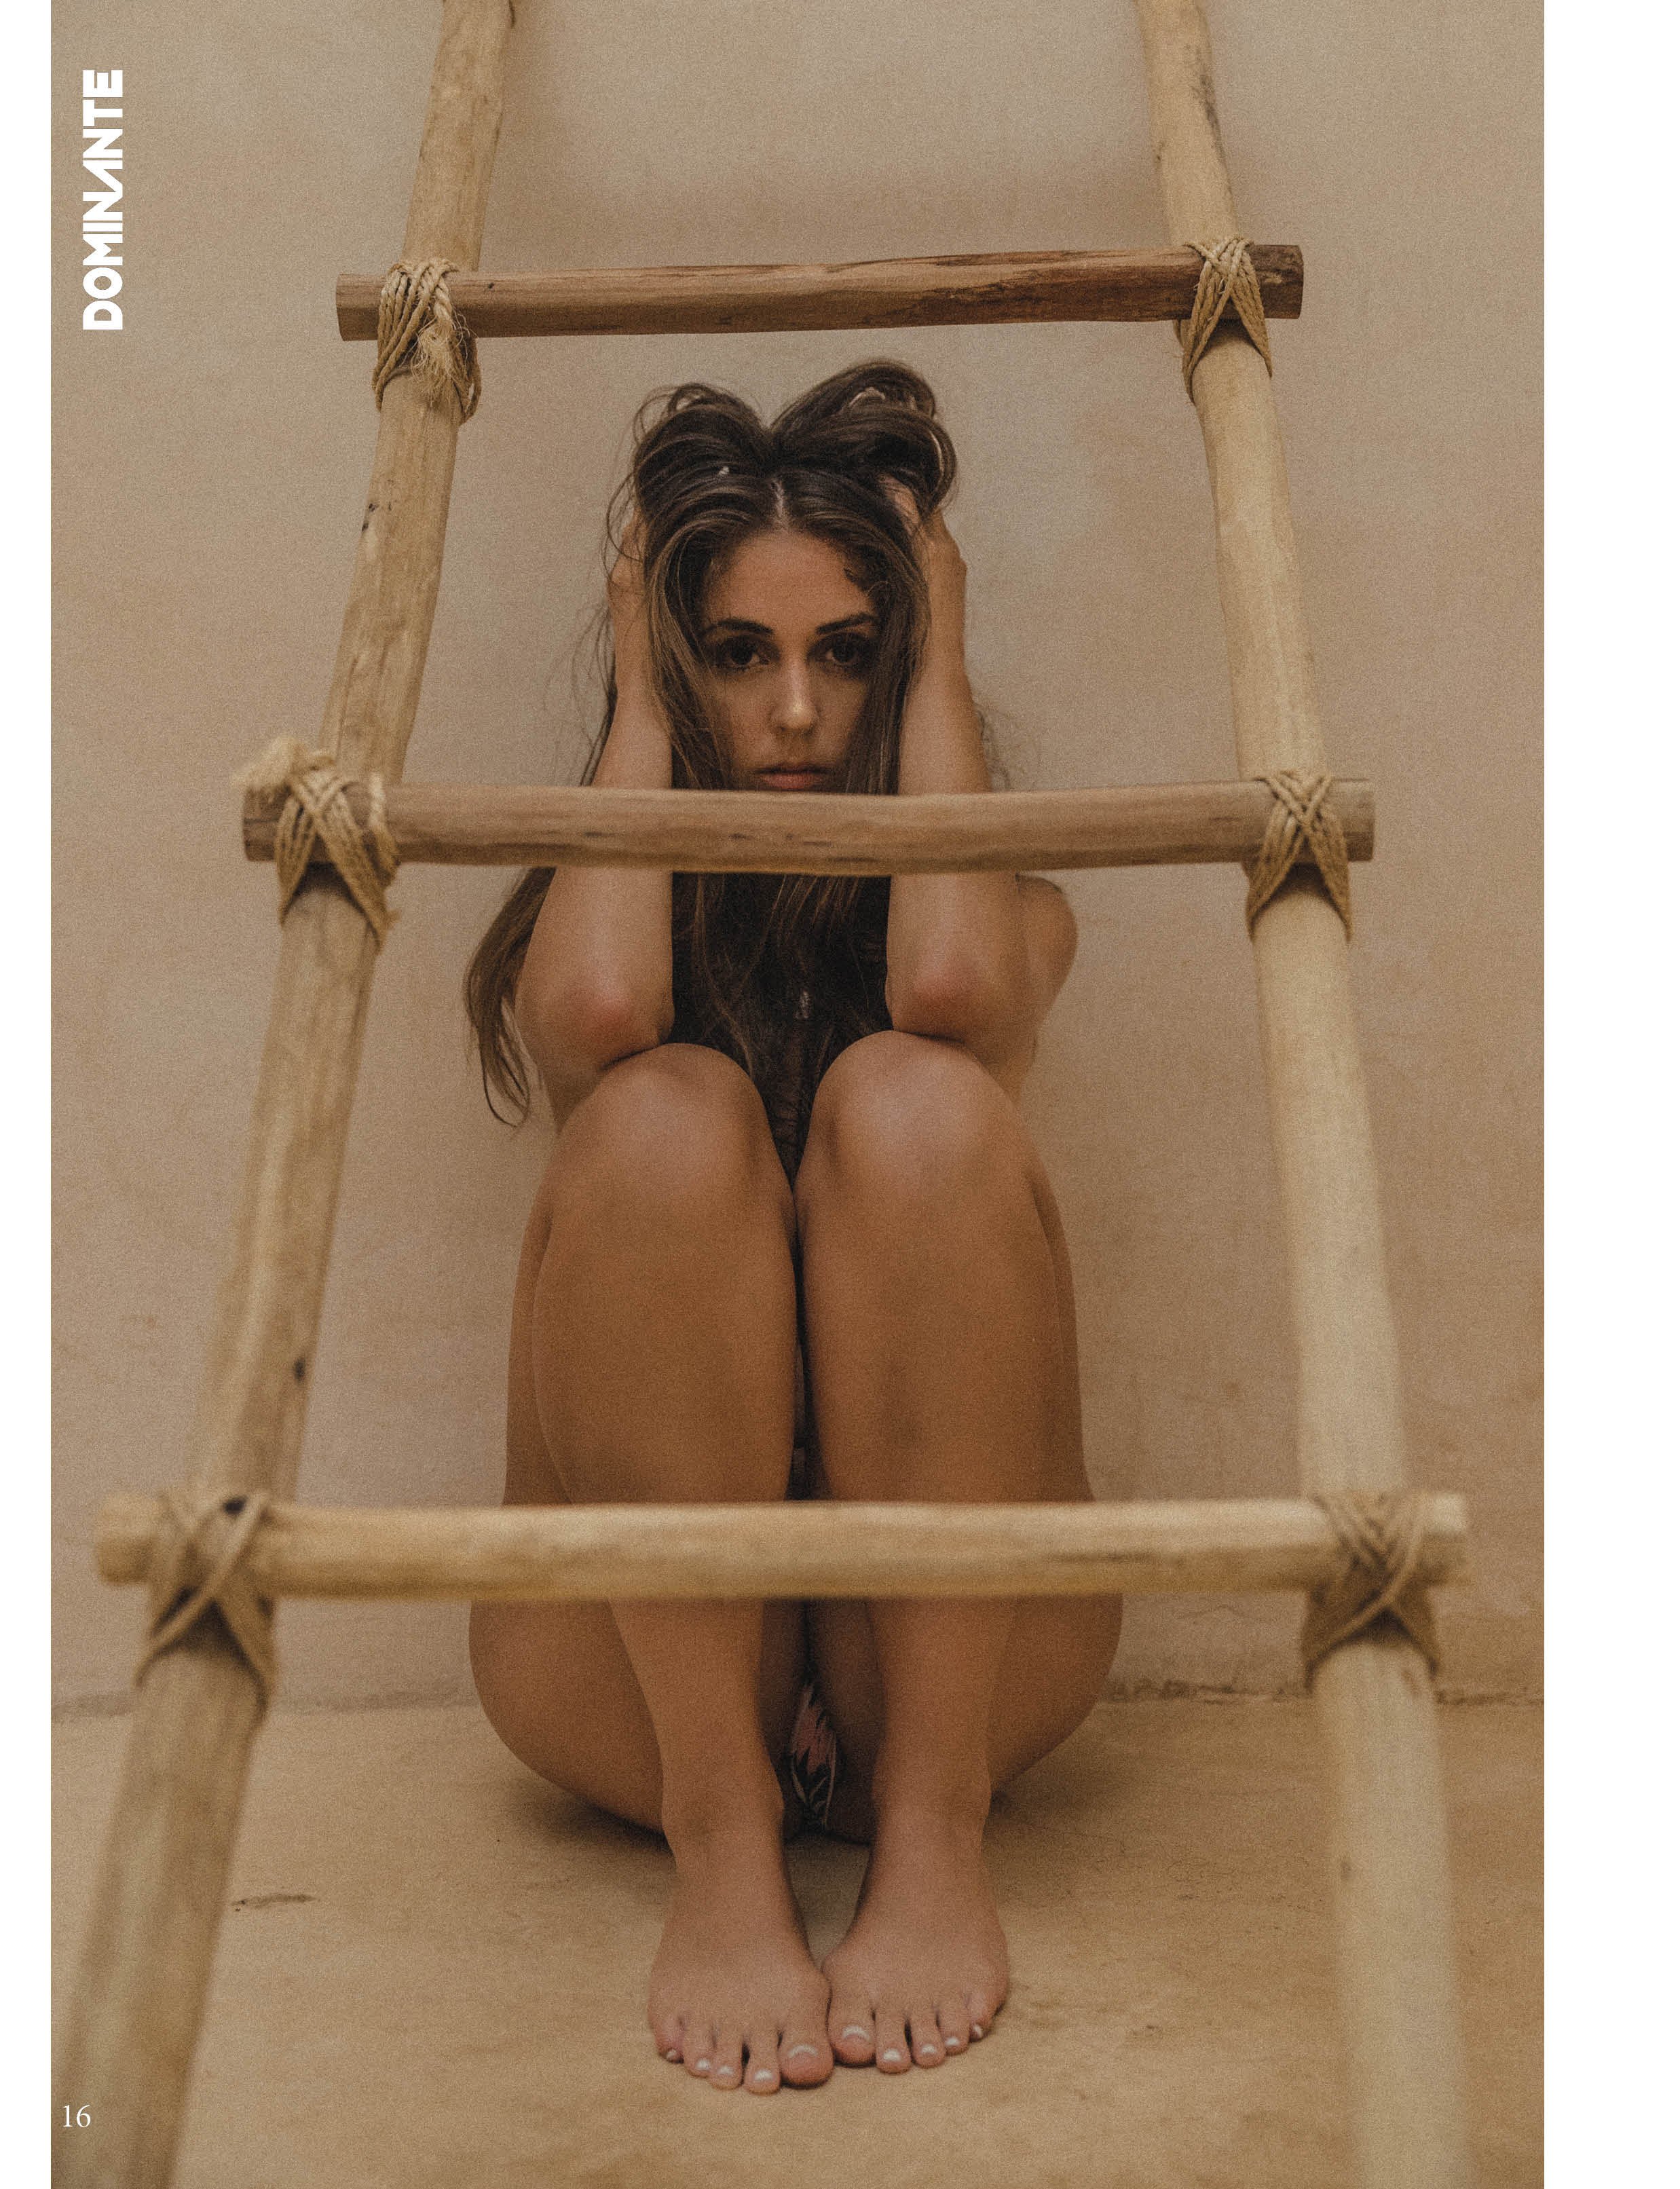 DOMINANTE French Magazine La Muses Edition Vol. 54 Feb. 2021 16.jpg